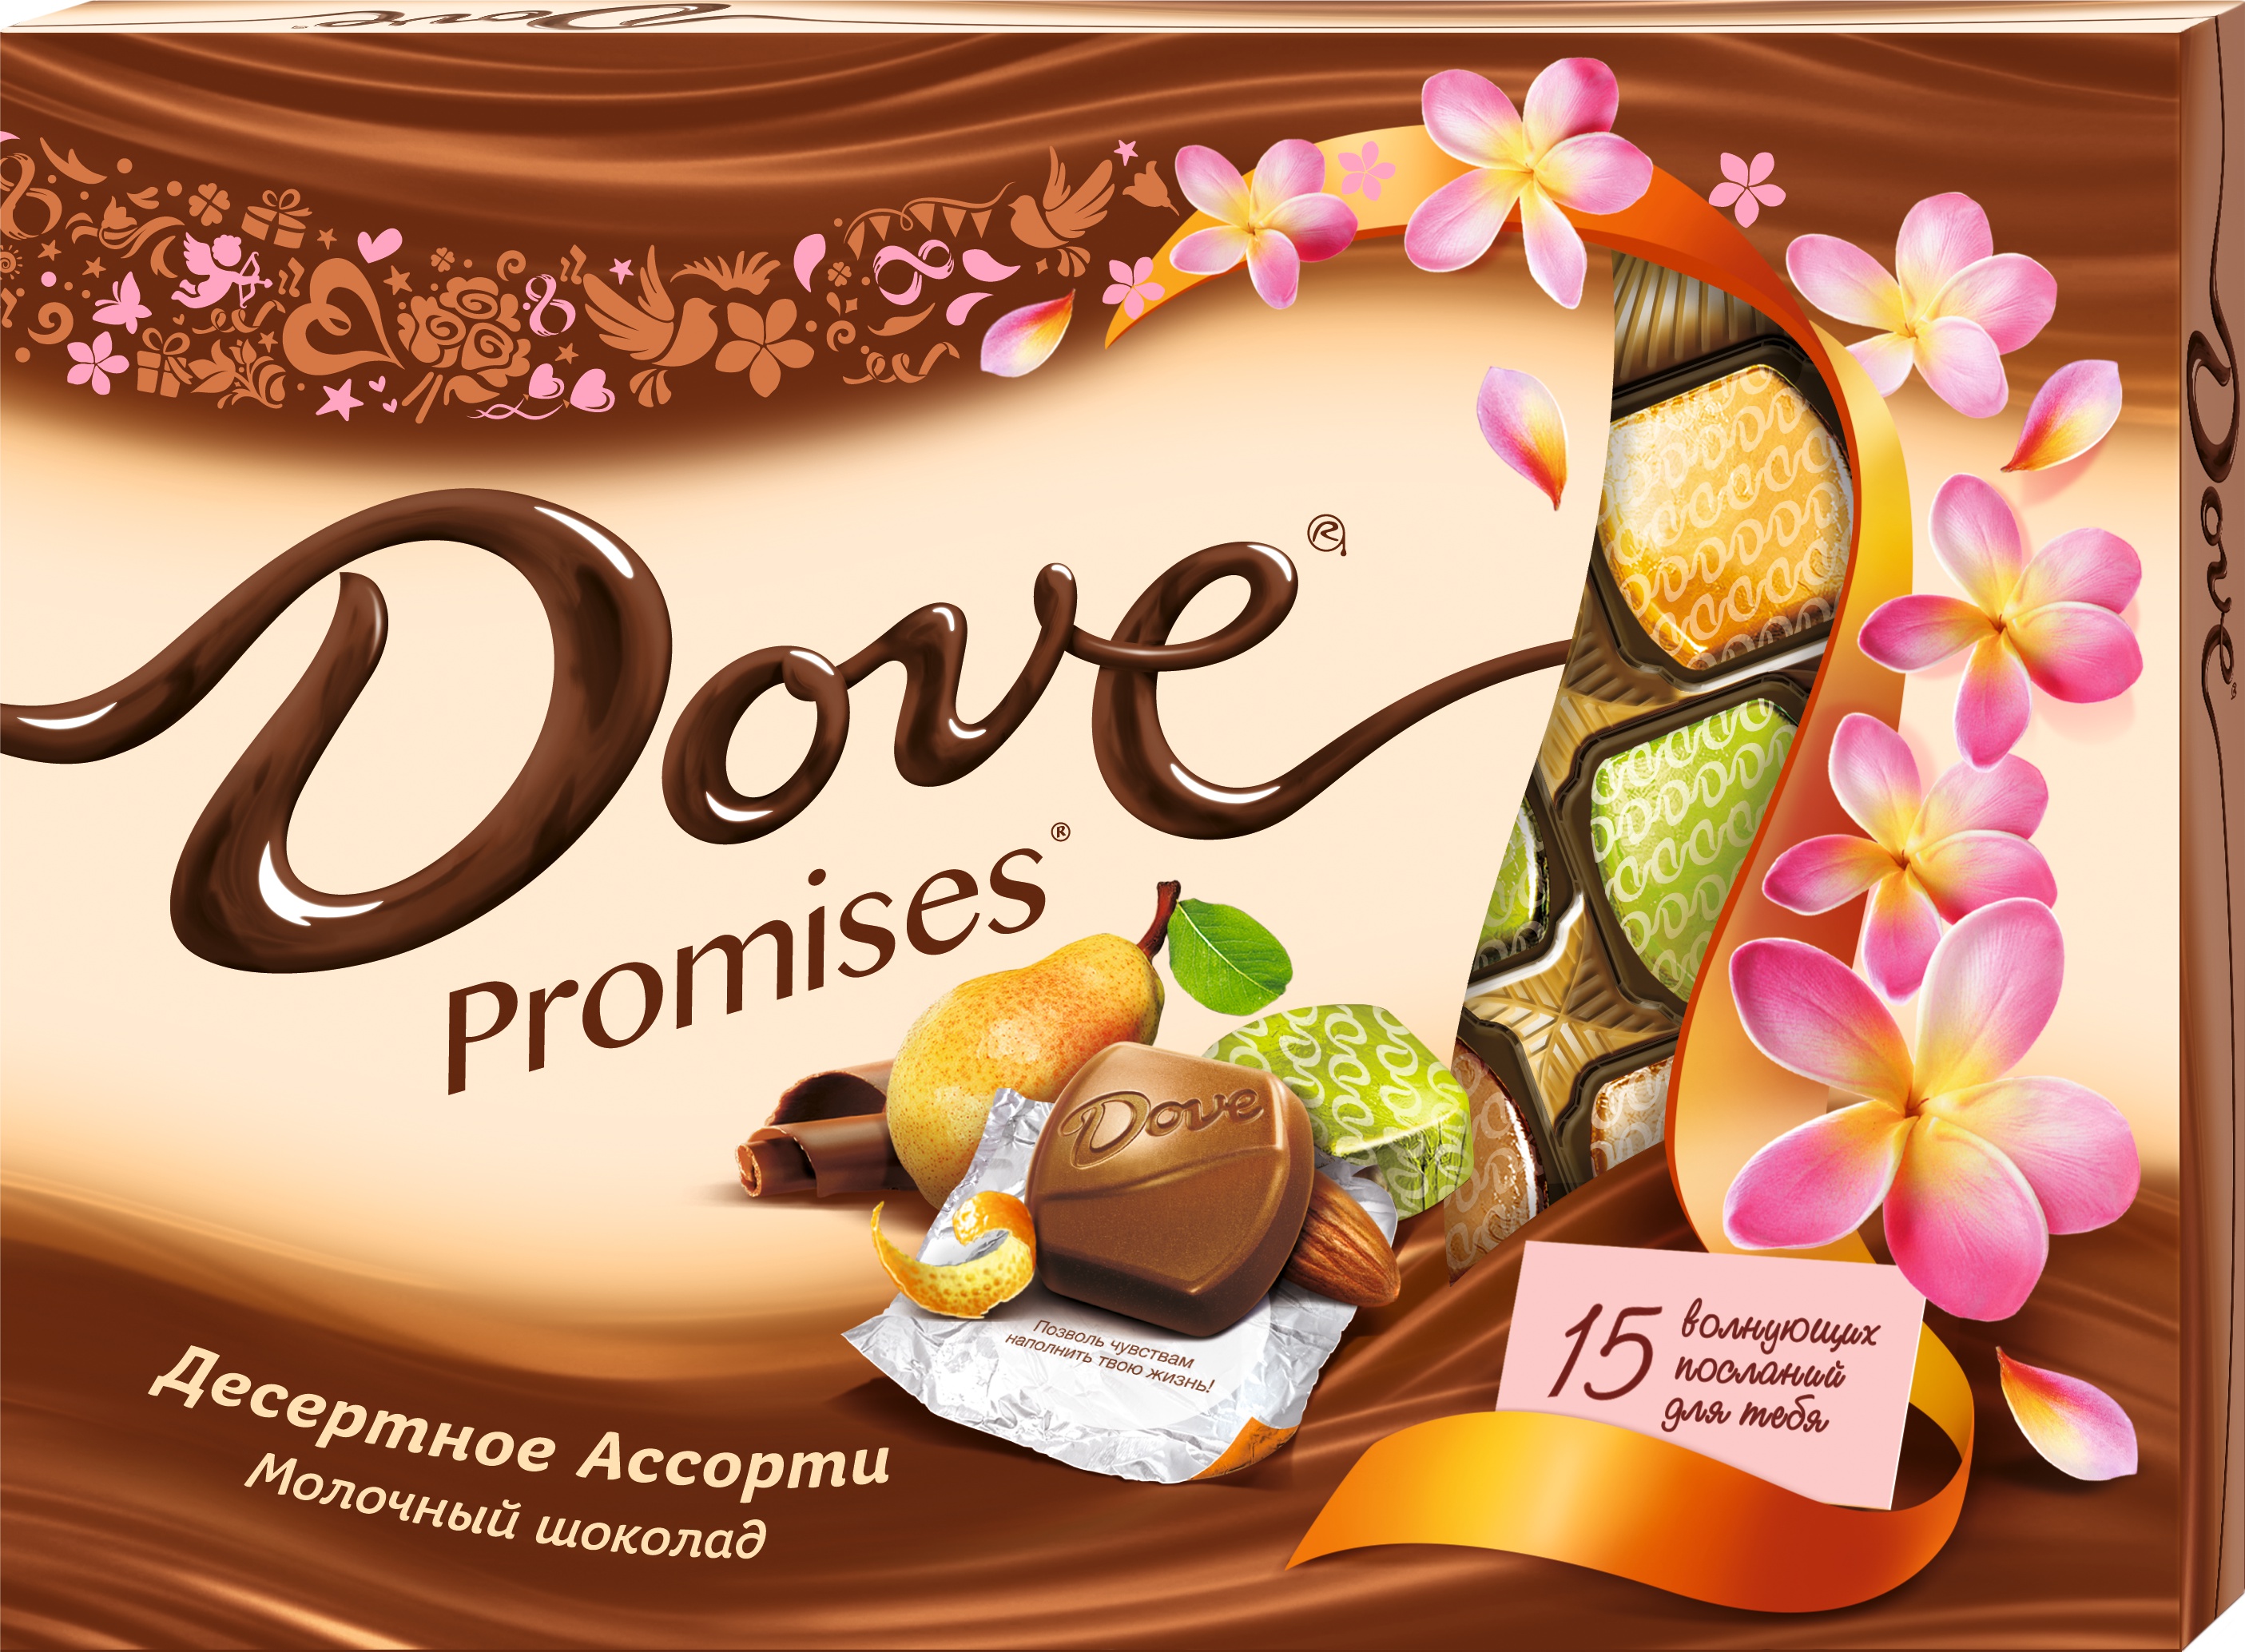 Шоколад Дав Промисес